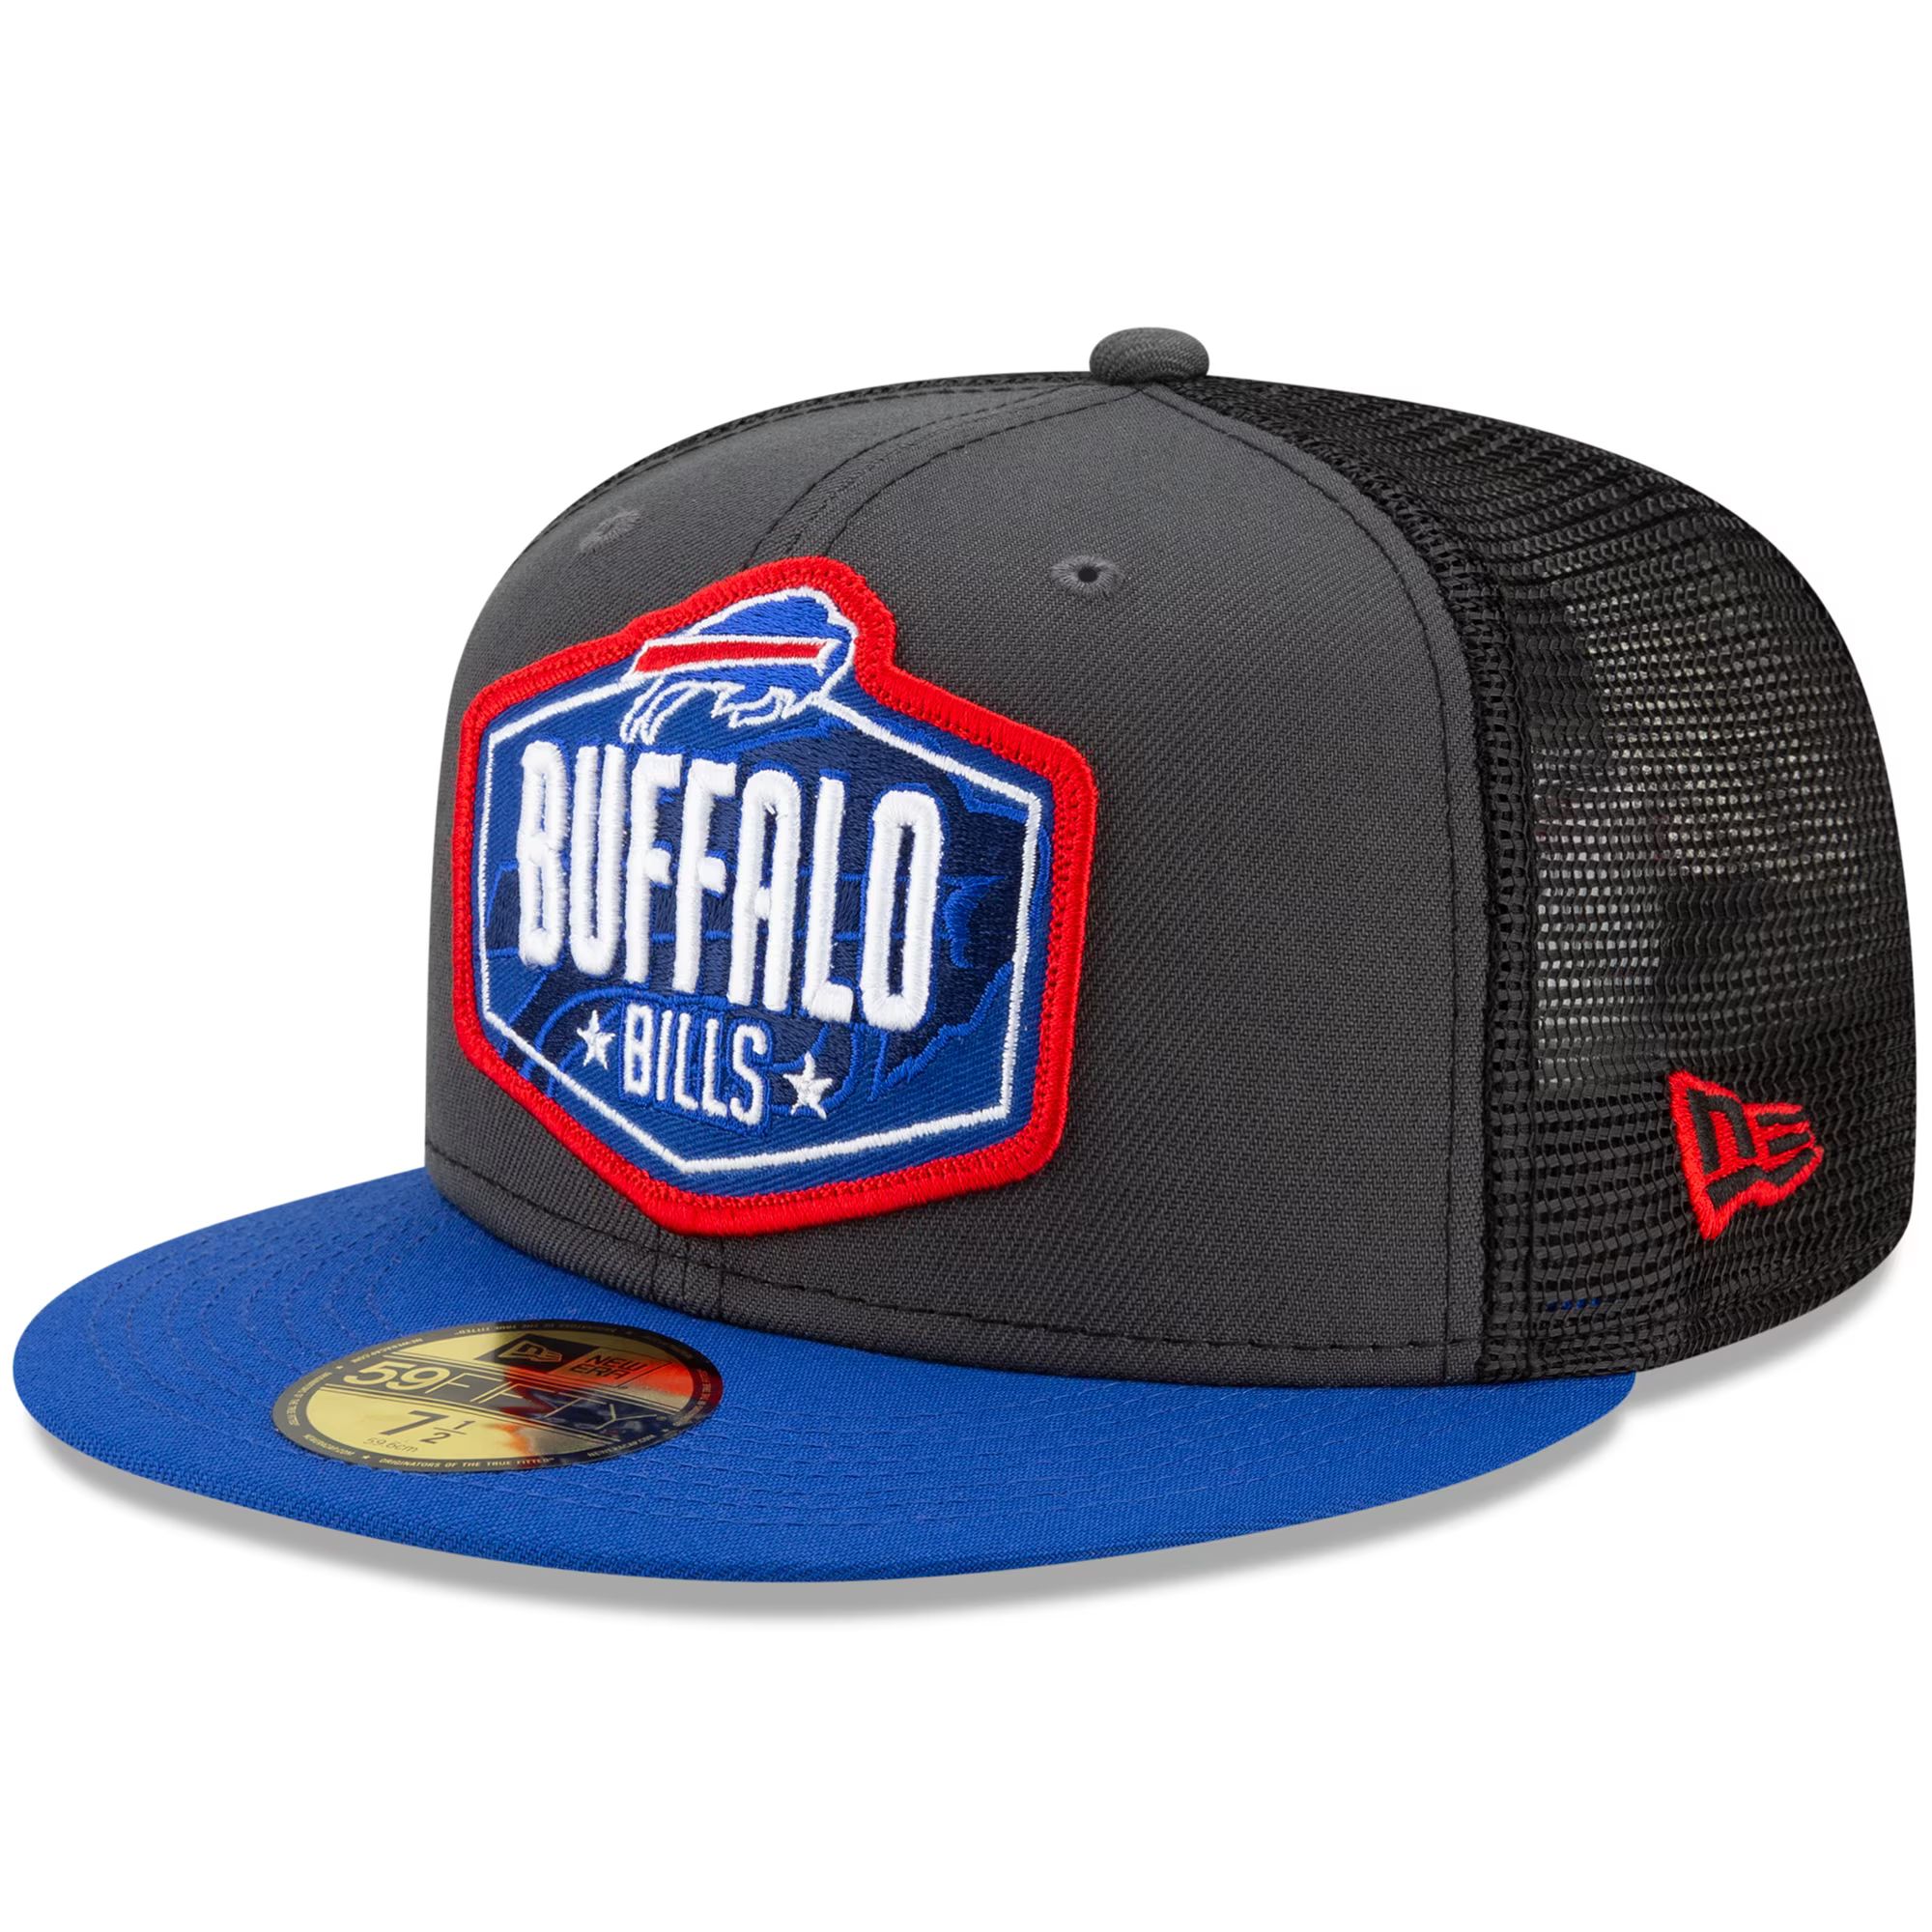 Buffalo Bills New Era 2021 NFL Draft On-Stage 59FIFTY Fitted Hat - Graphite/Royal | Fanatics